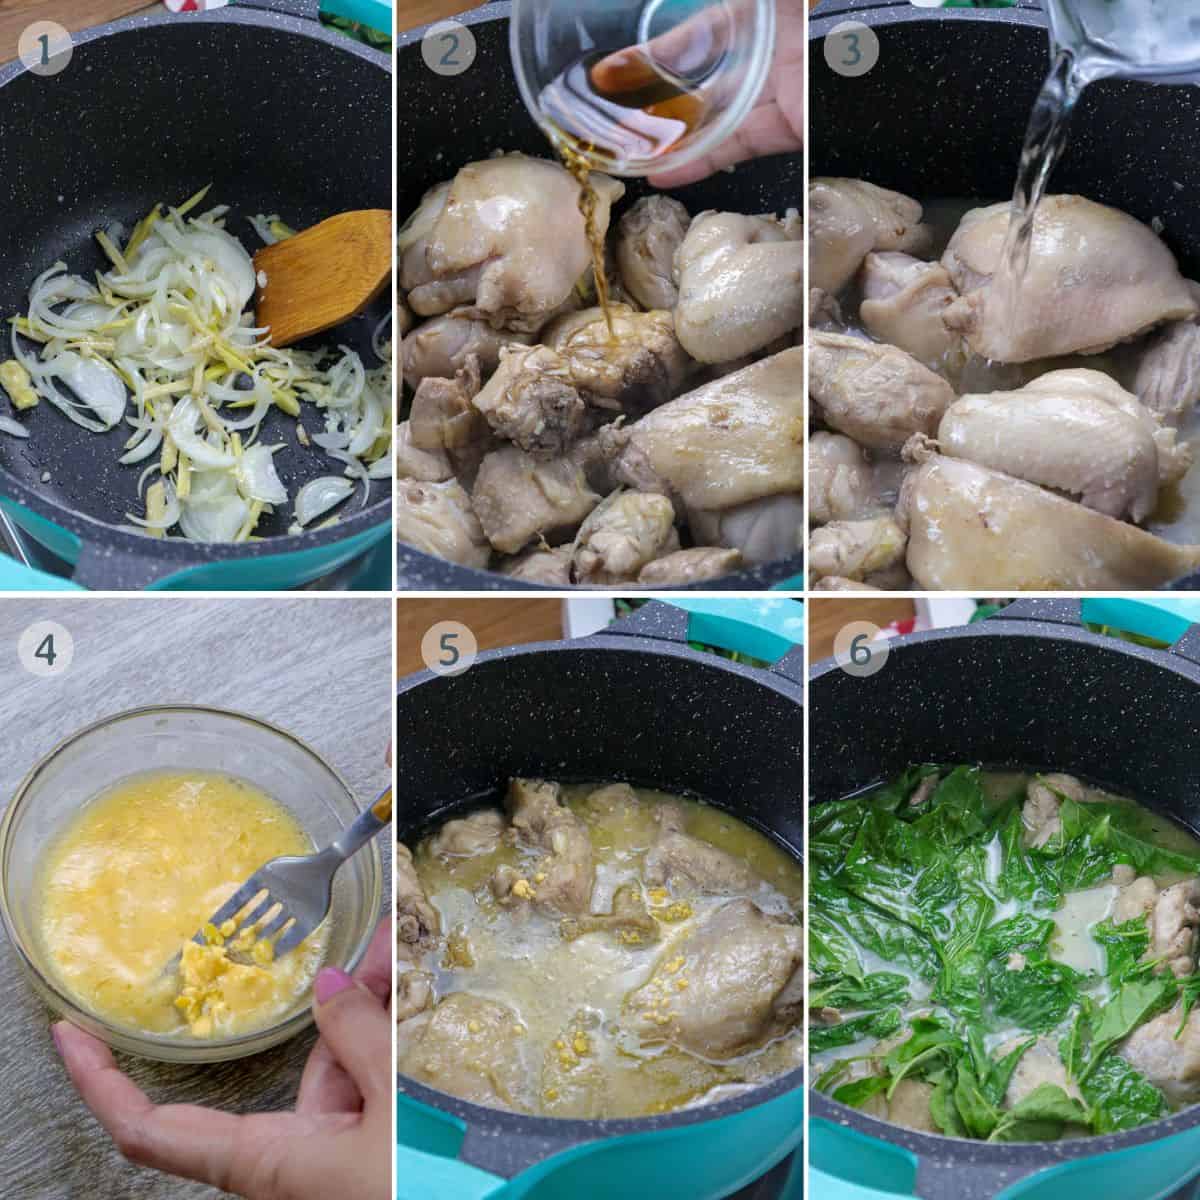 cooking pinatisang manok in a pot.